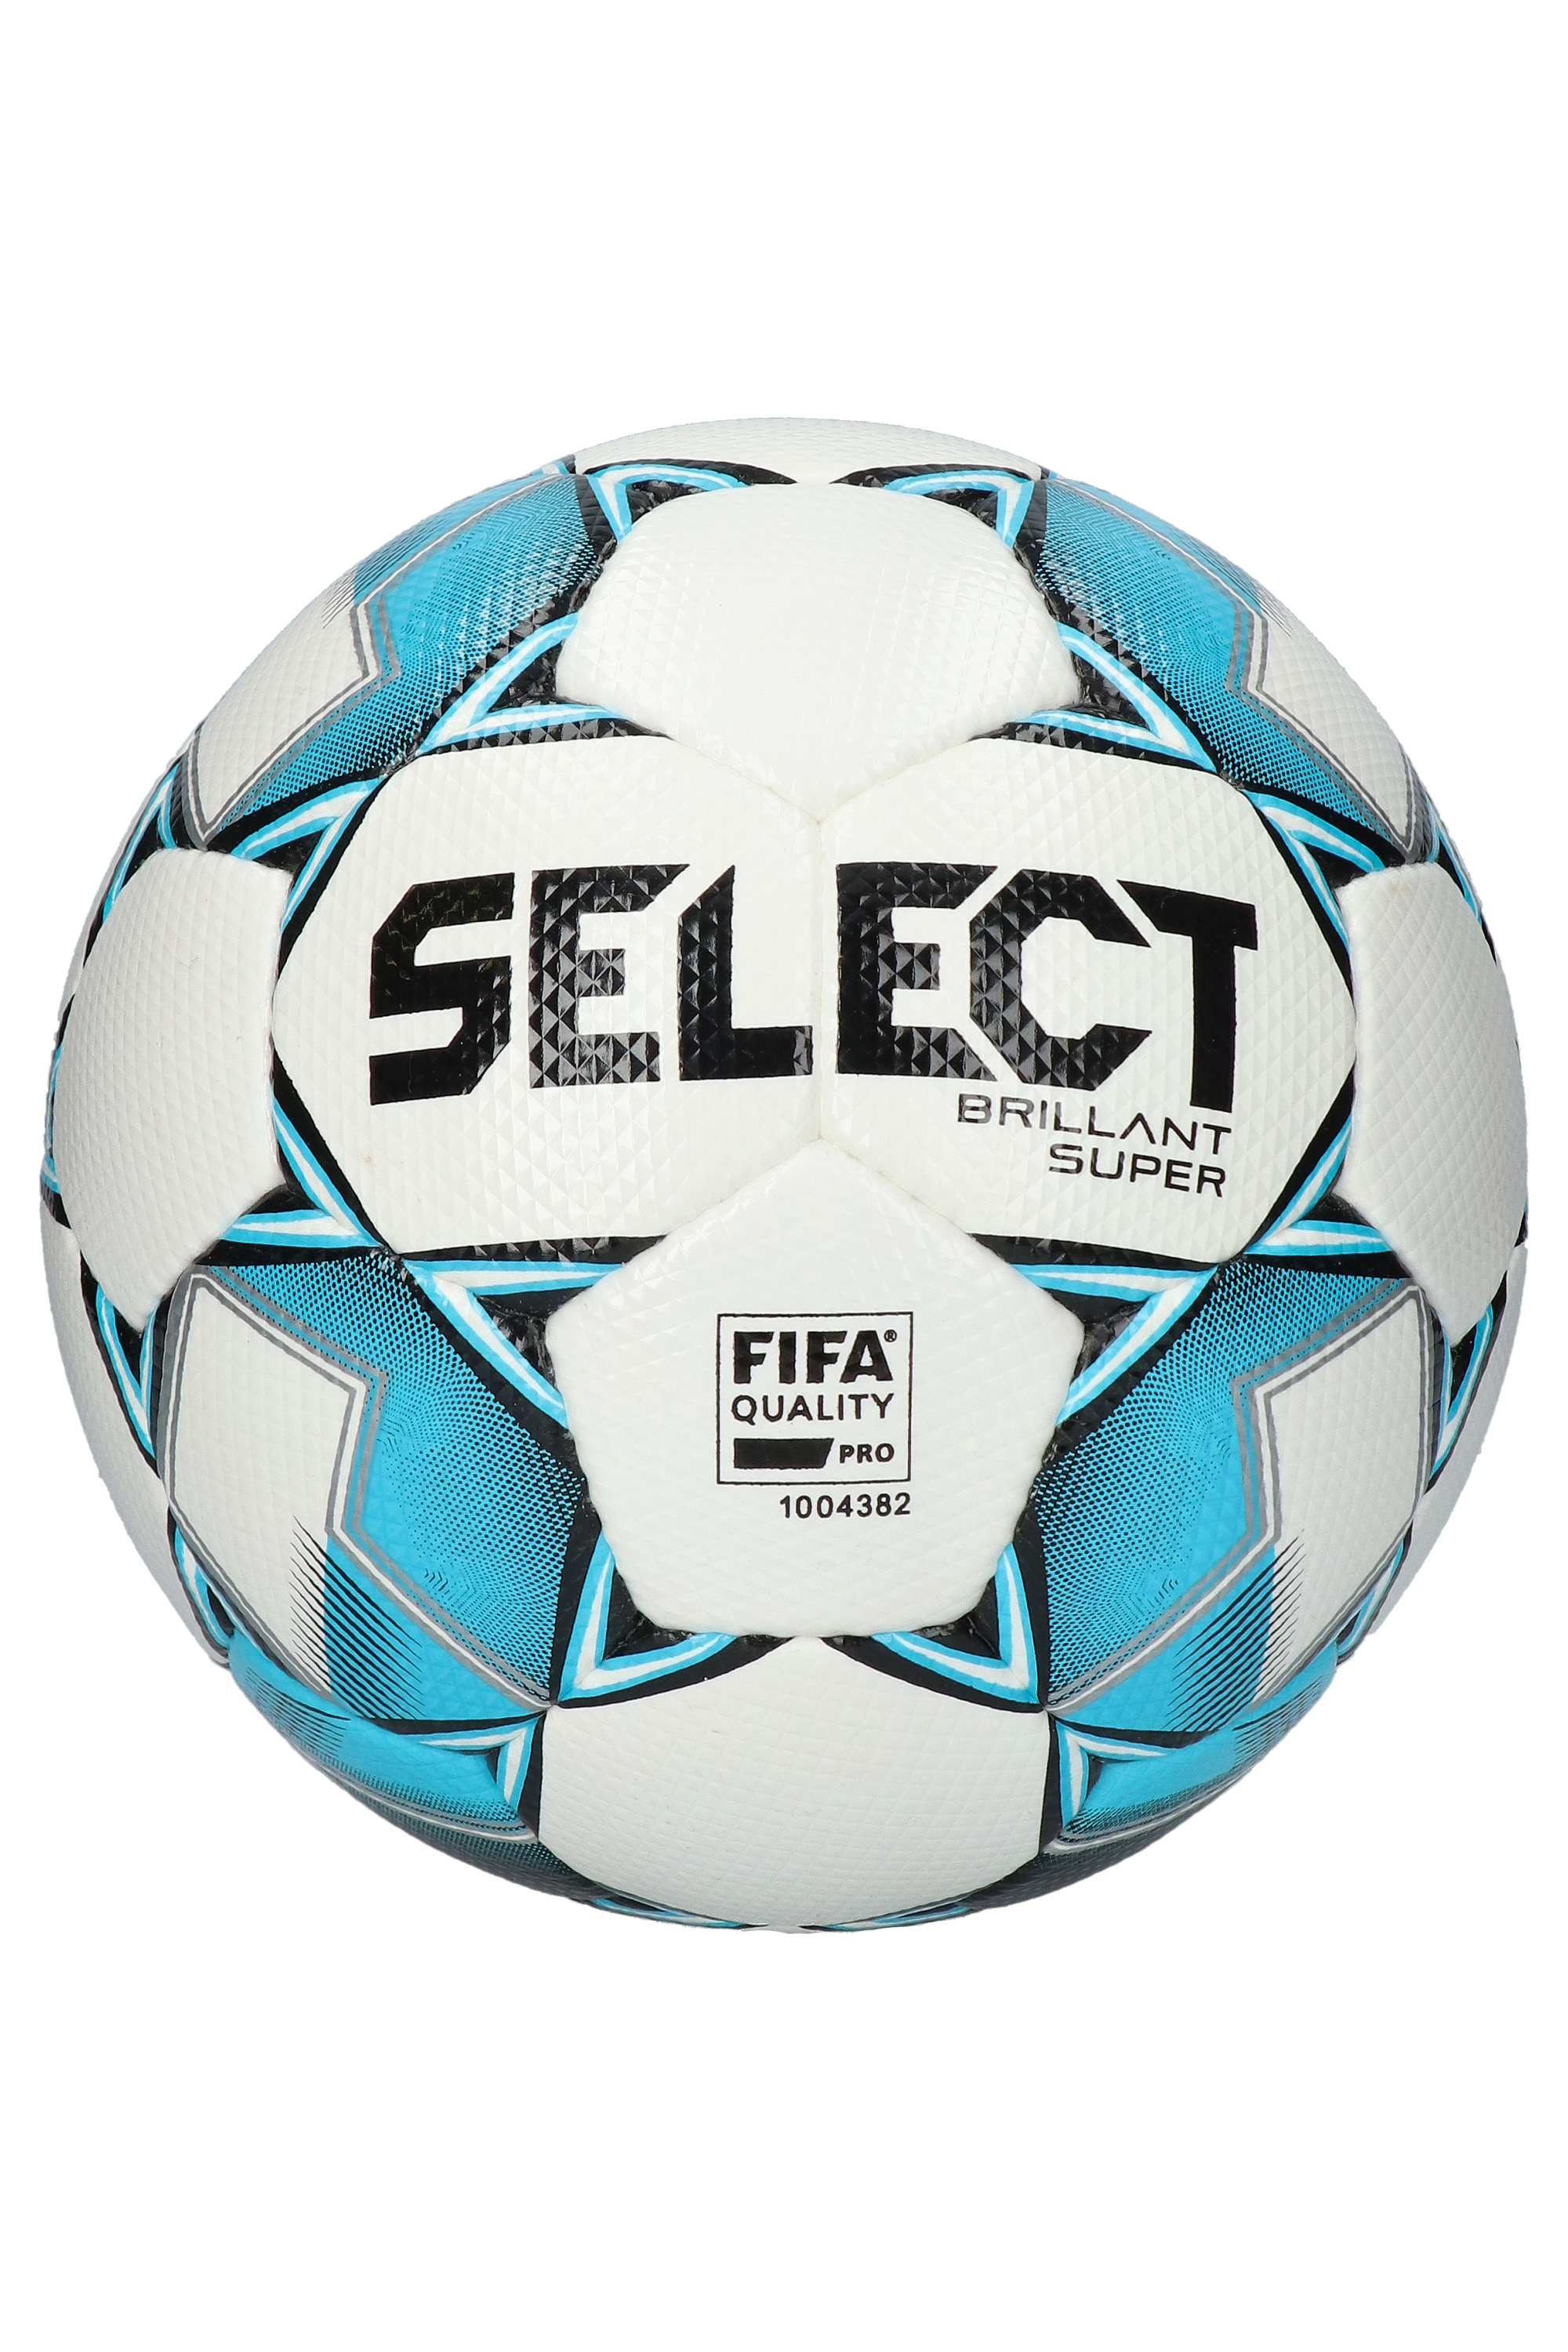 Селект. Мяч select brillant super. Мяч Селект 5 бриллиант. Select мяч FIFA brillant super Brilliant. Мяч select brillant super 1995.